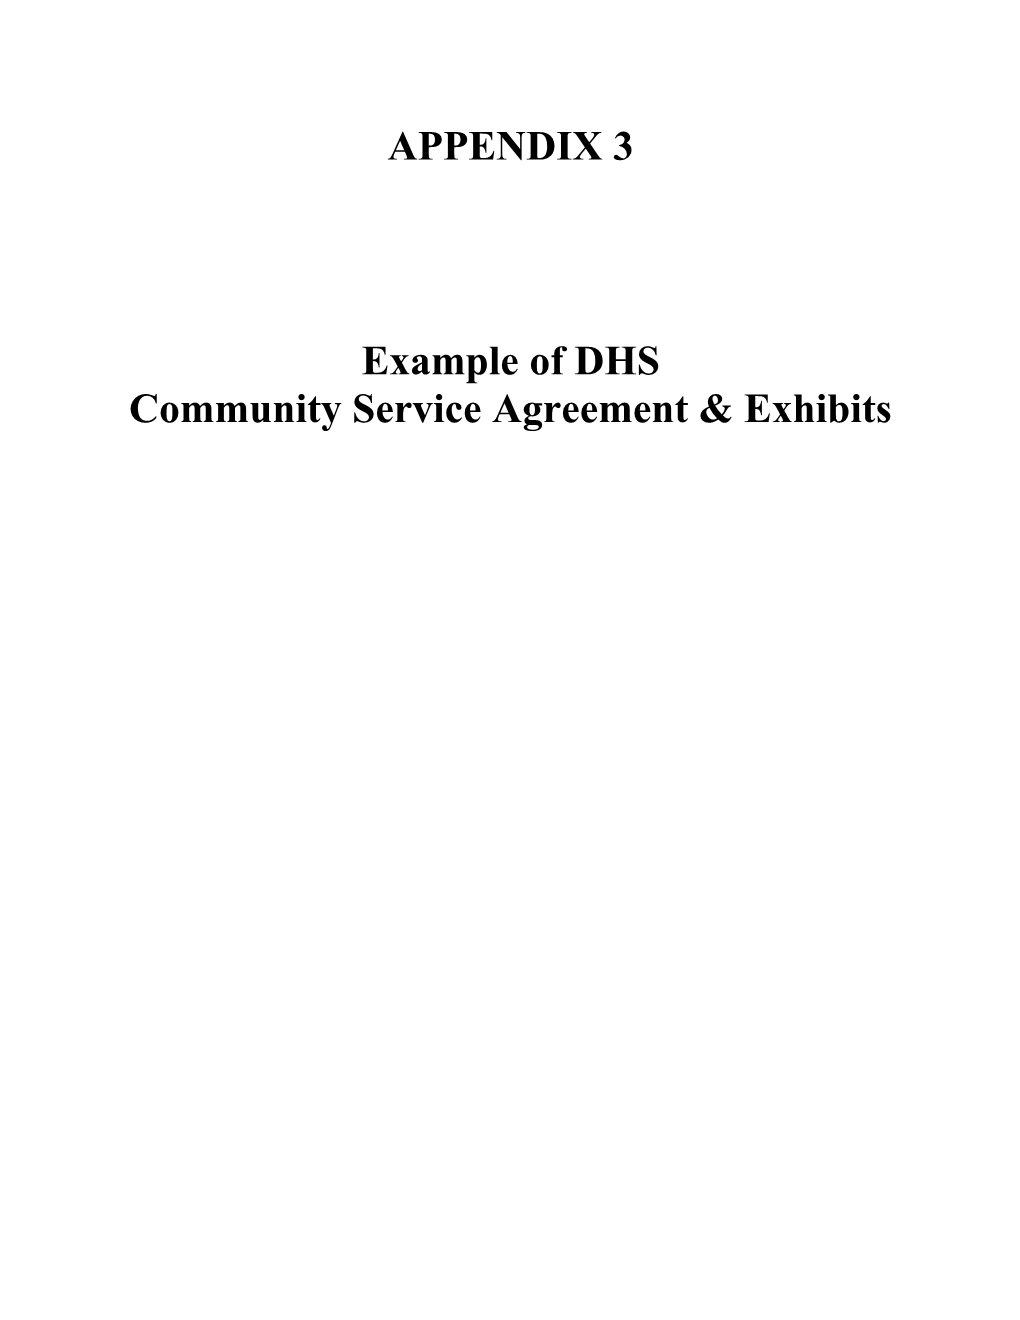 Community Service Agreement & Exhibits